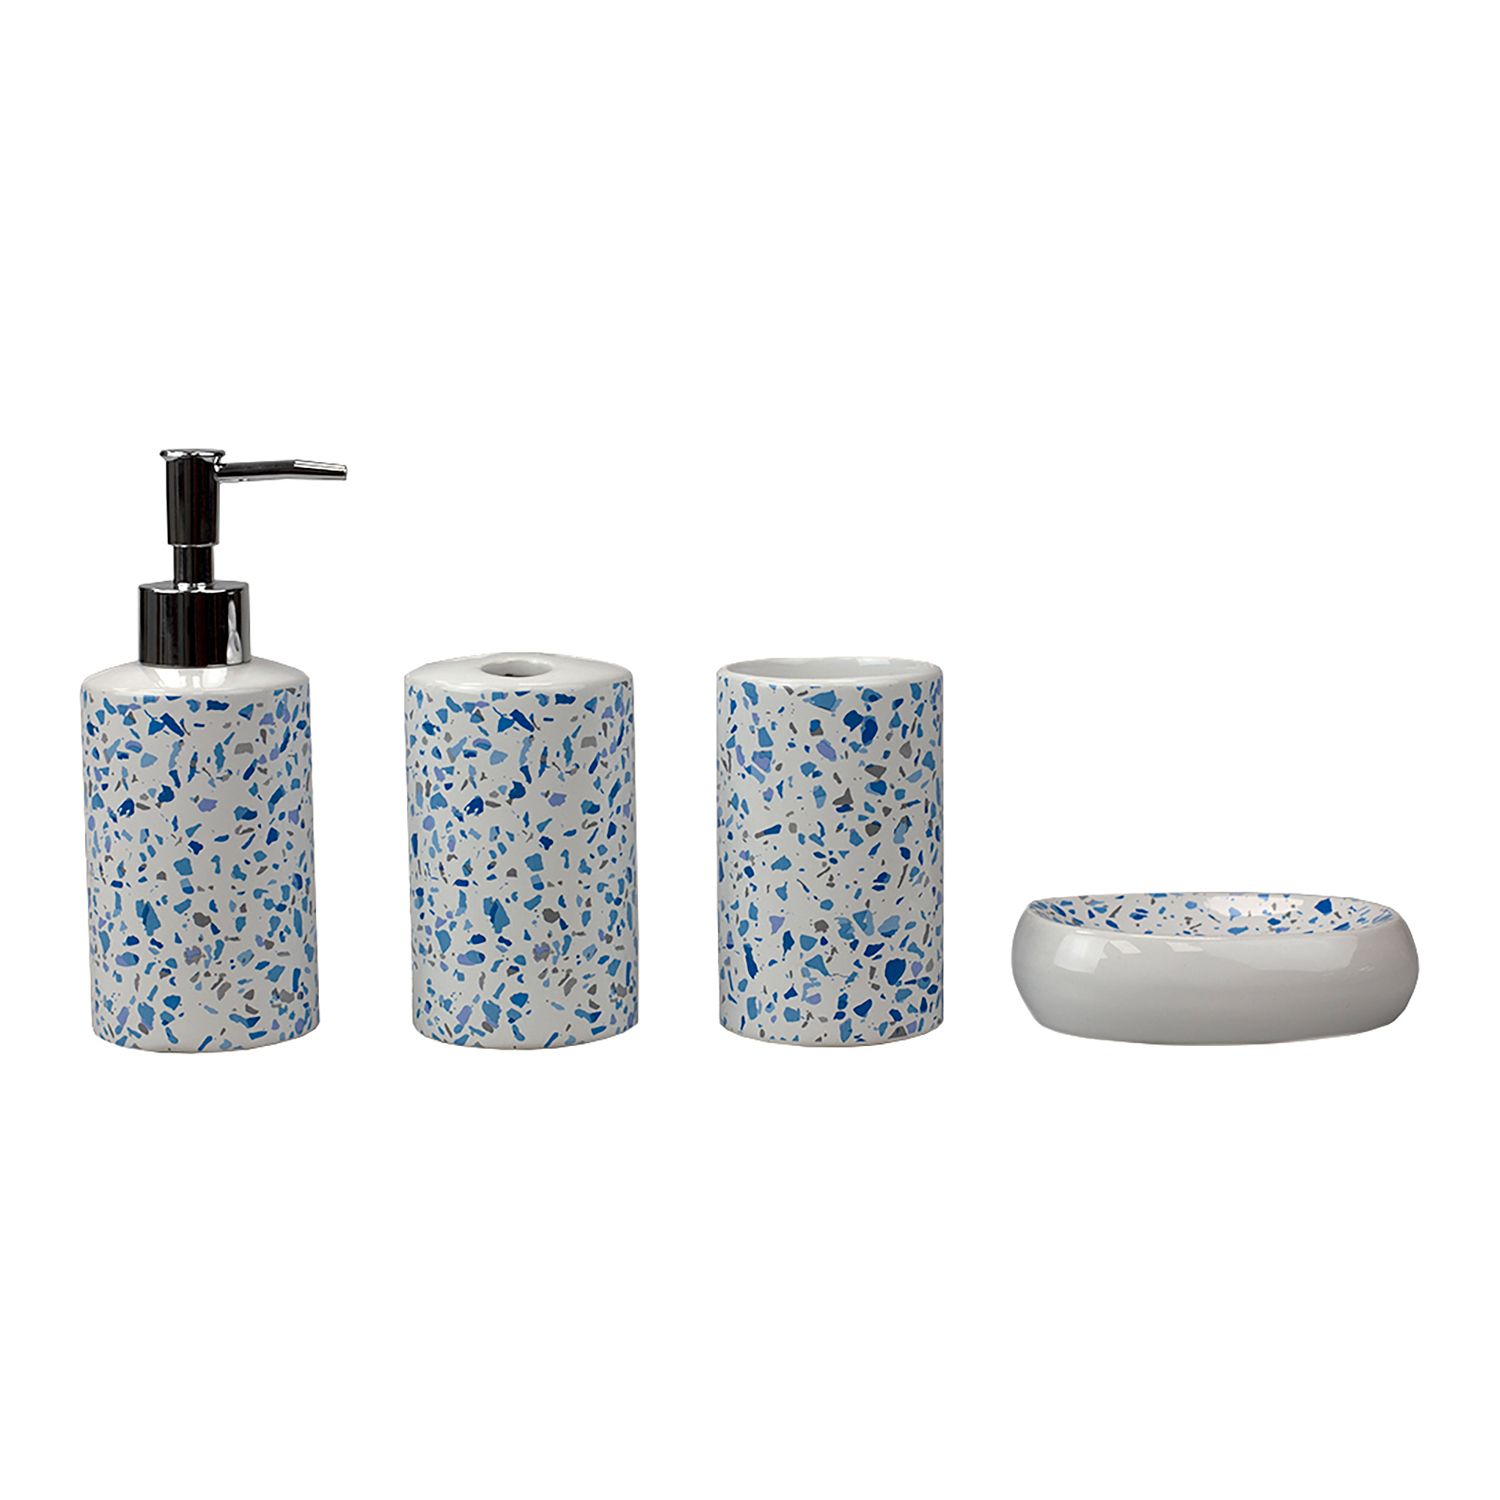 Image for Home Basics Trendy Terrazzo 4-Piece Ceramic Bath Accessory Set at Kohl's.